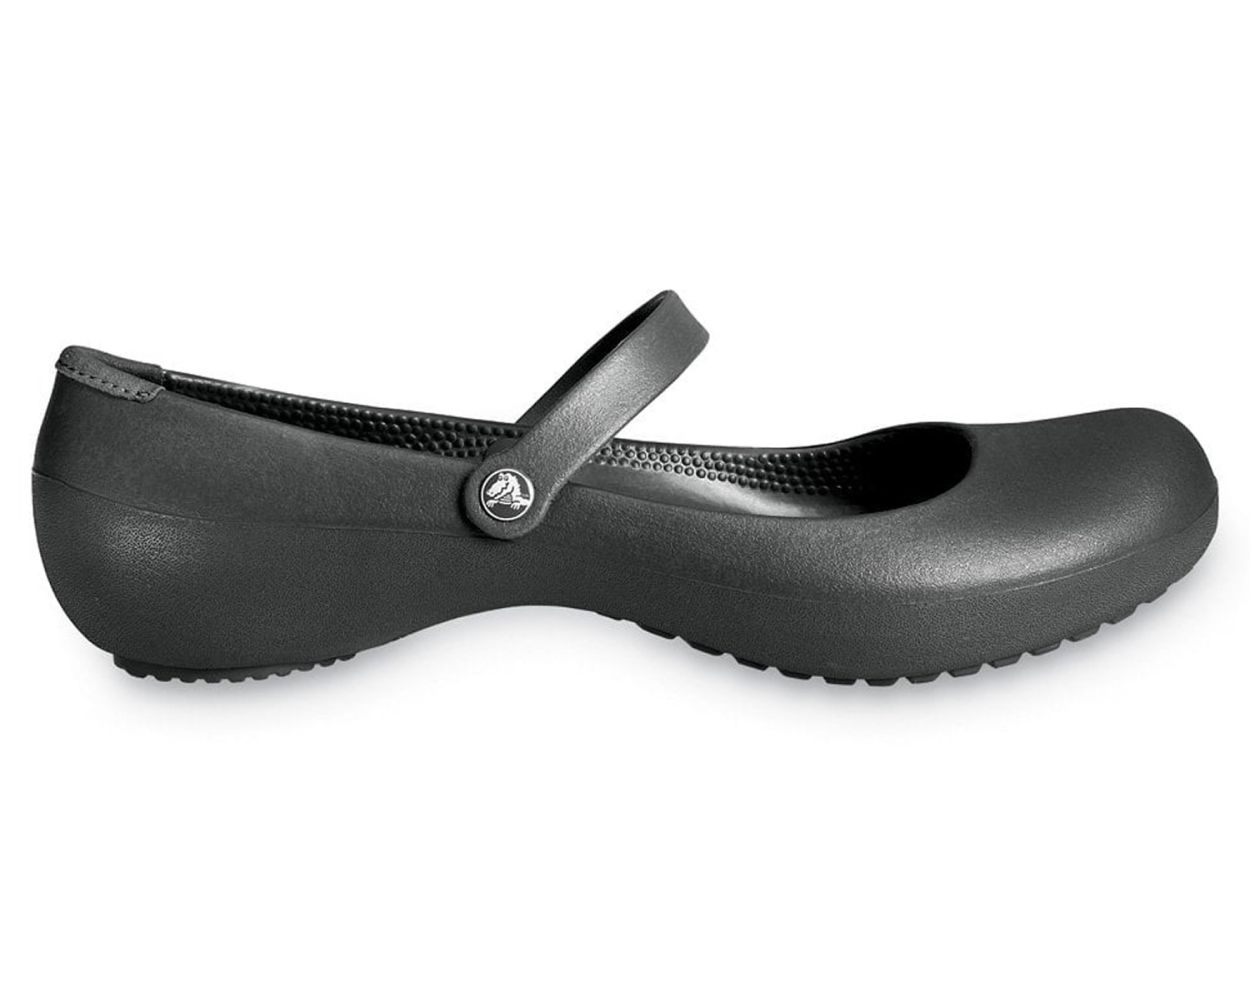 Crocs Alice Work Shoes Black | World of Clogs